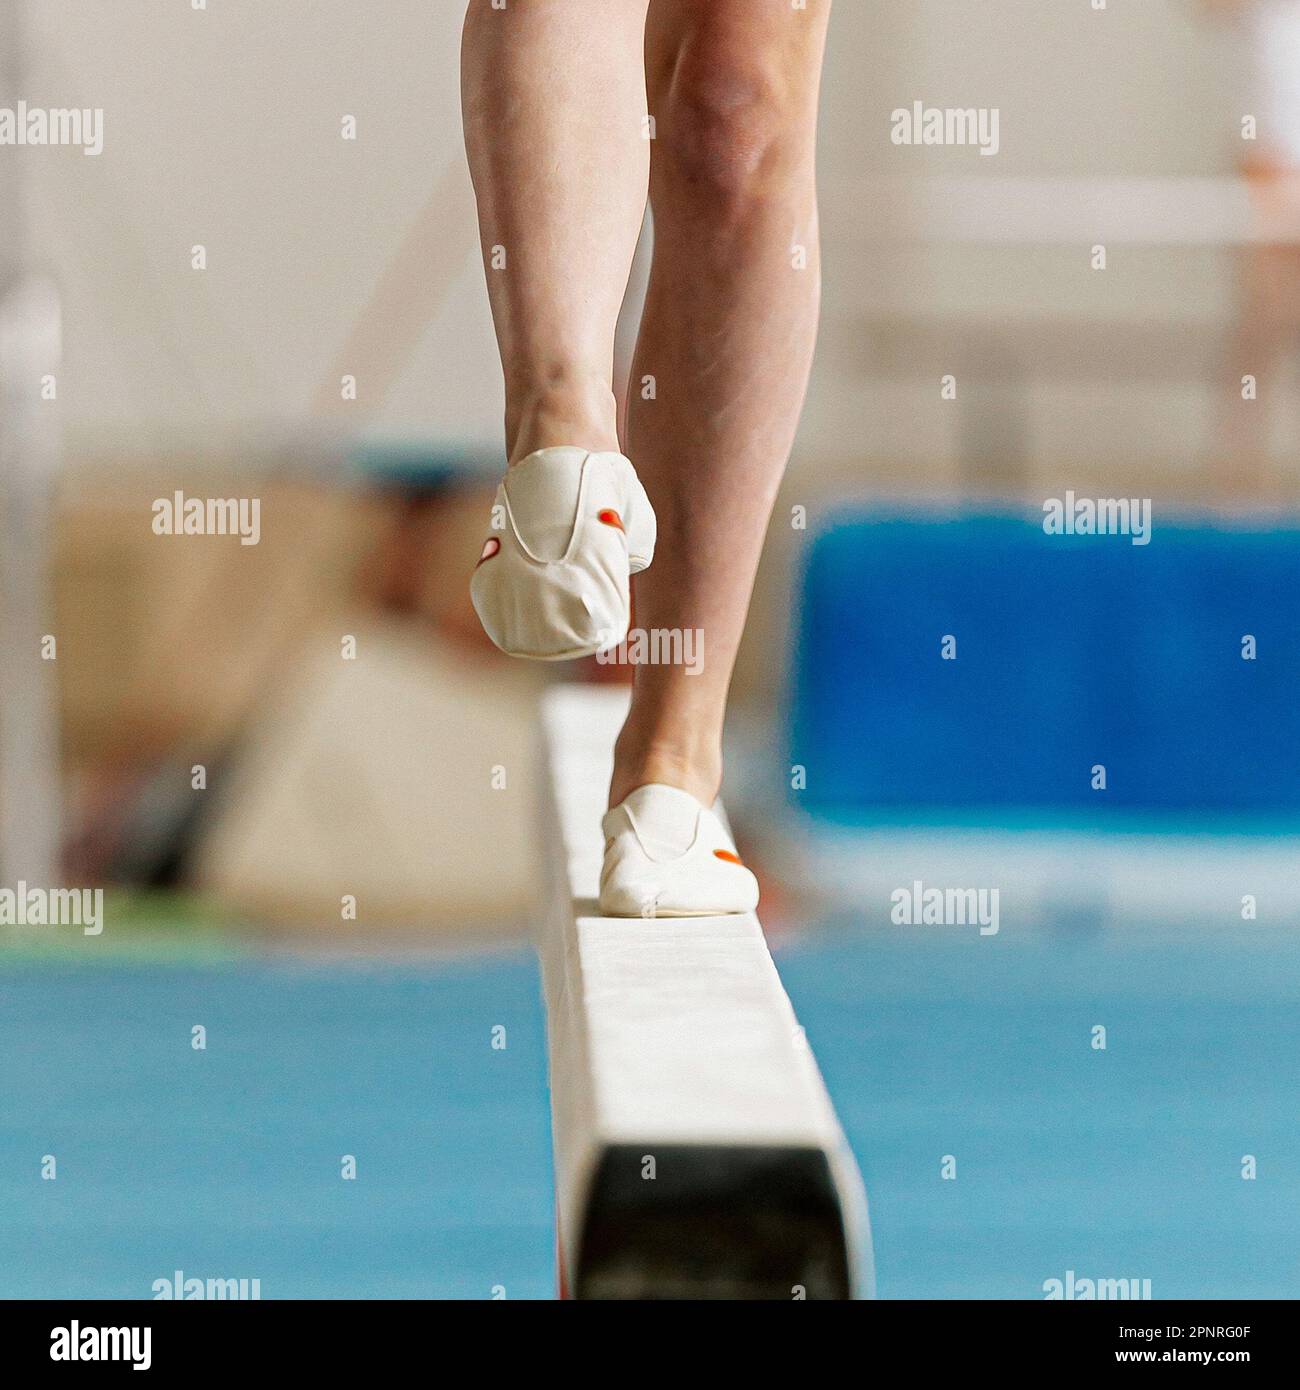 close-up legs girl gymnast step on balance beam in artistic gymnastics, sports summer games Stock Photo